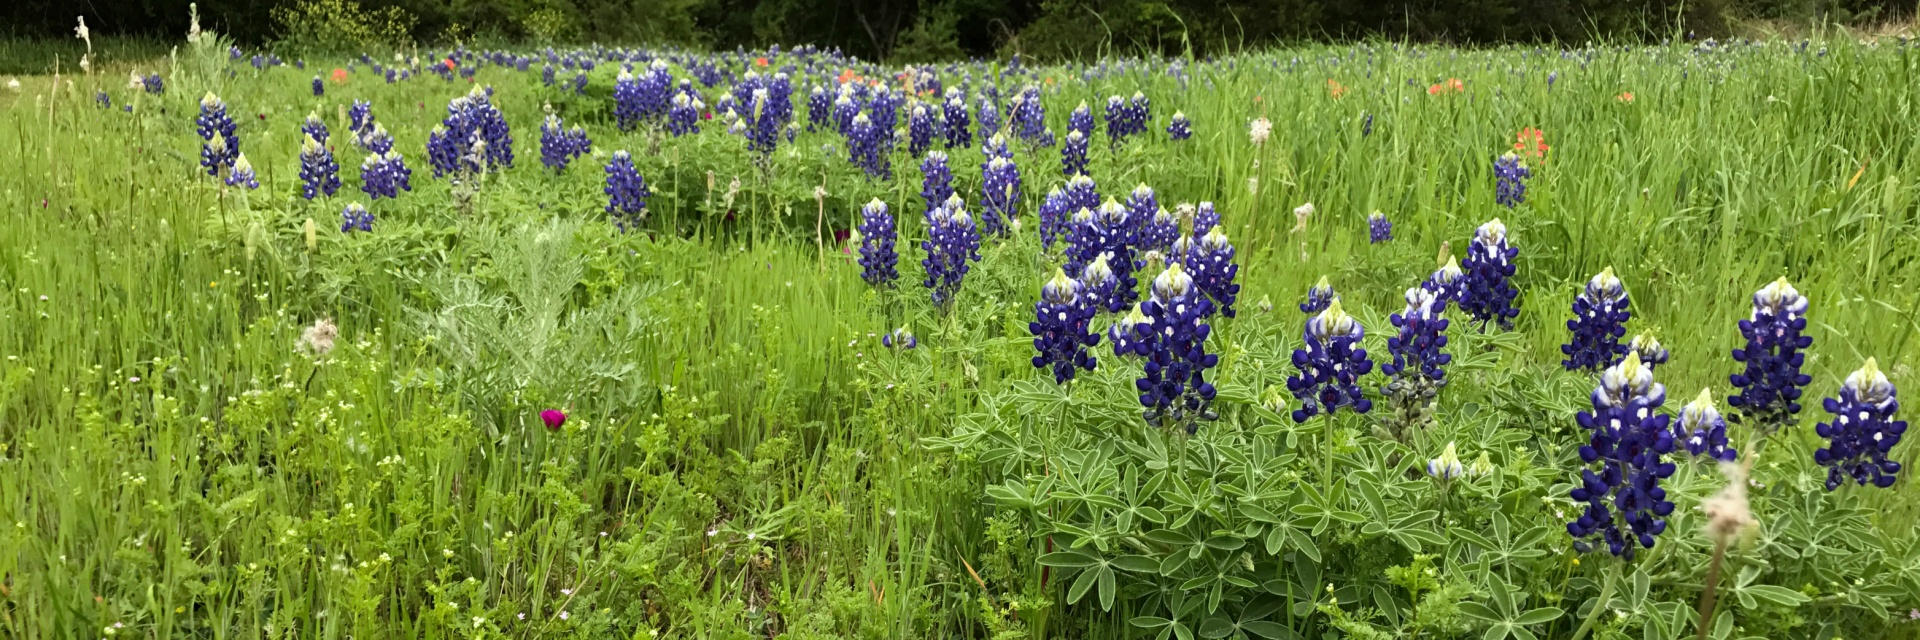 bluebonnets texas flowers free photo